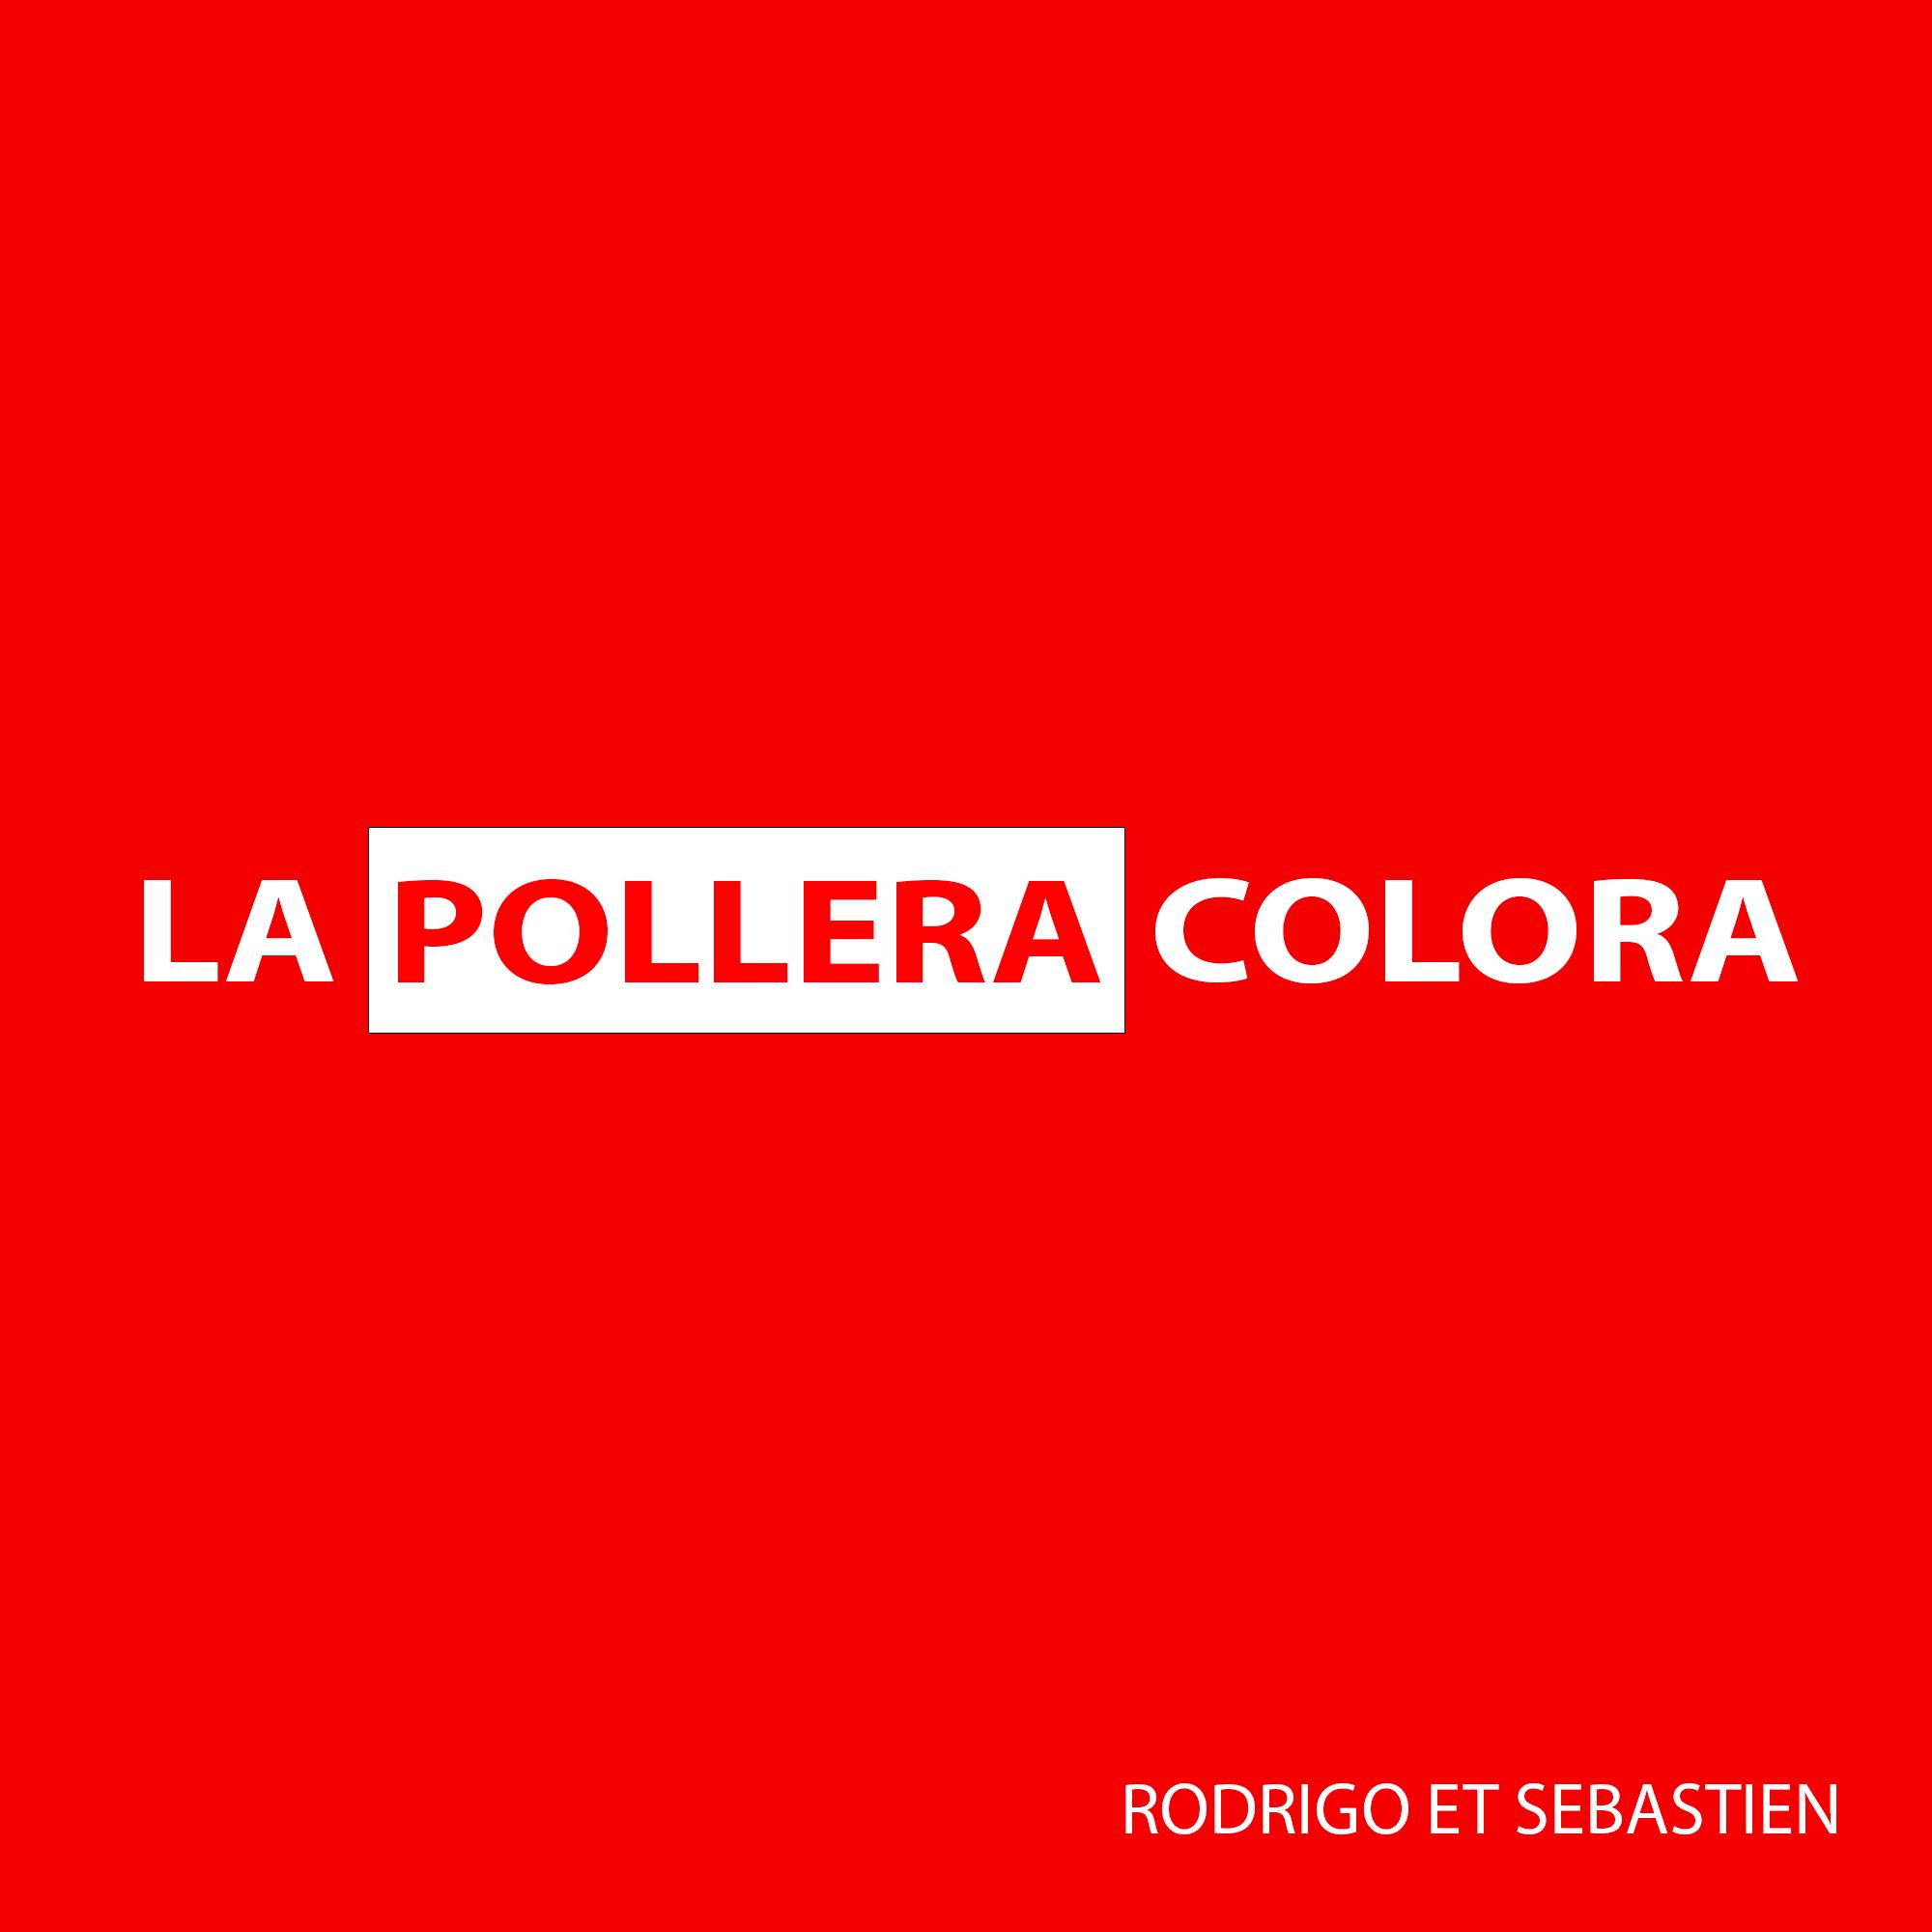 LA POLLERA COLORA - Rodrigo et Sébastien